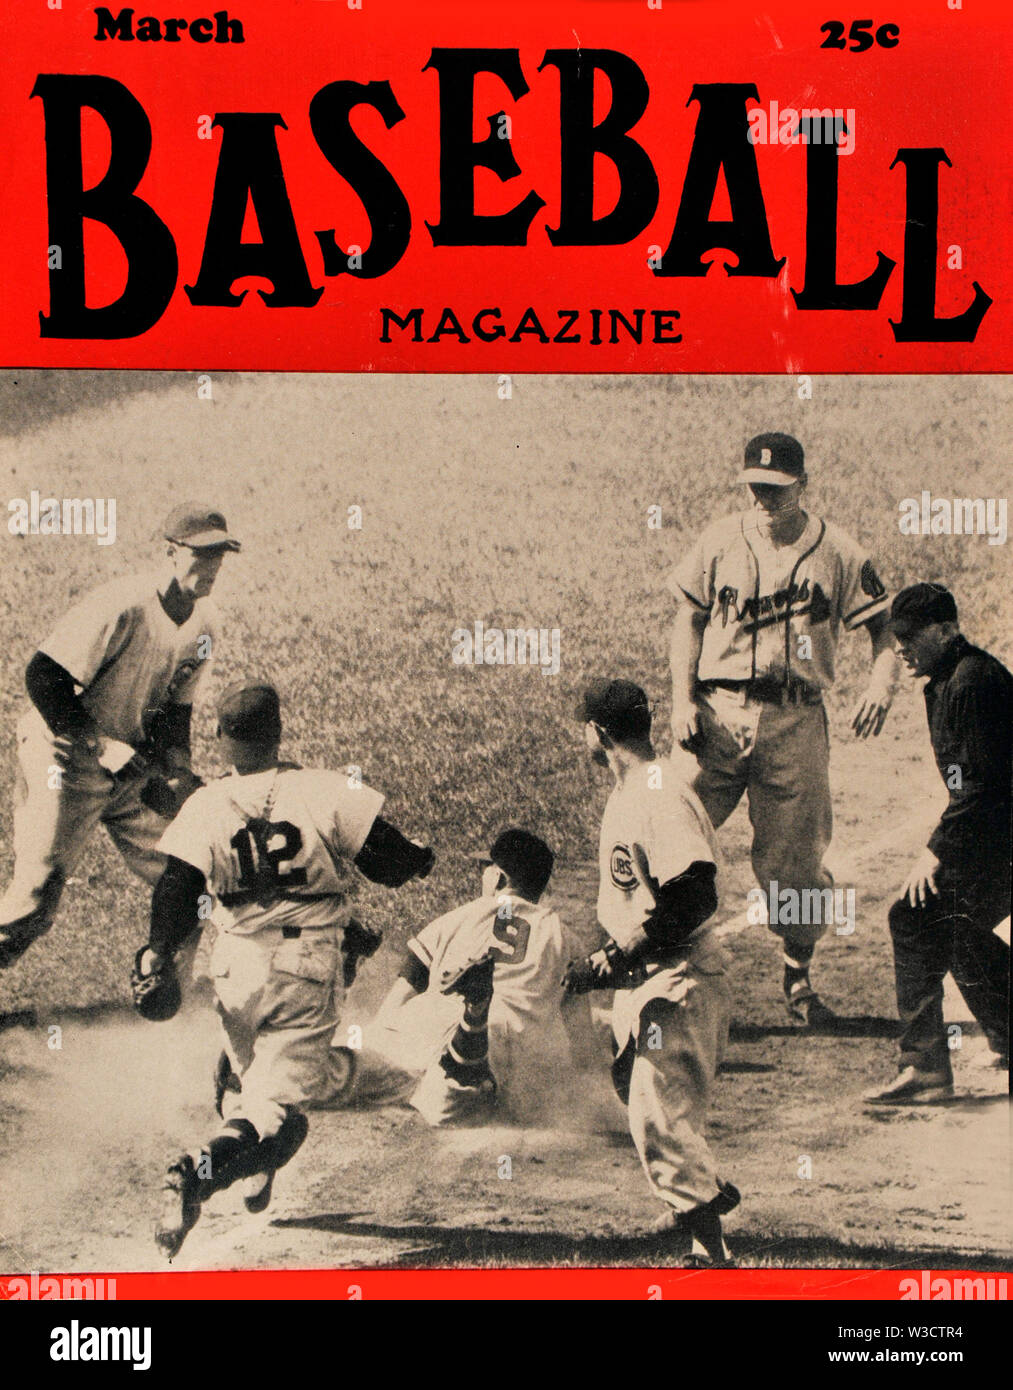 Vintage Baseball Magazine cover circa 1940s Stock Photo